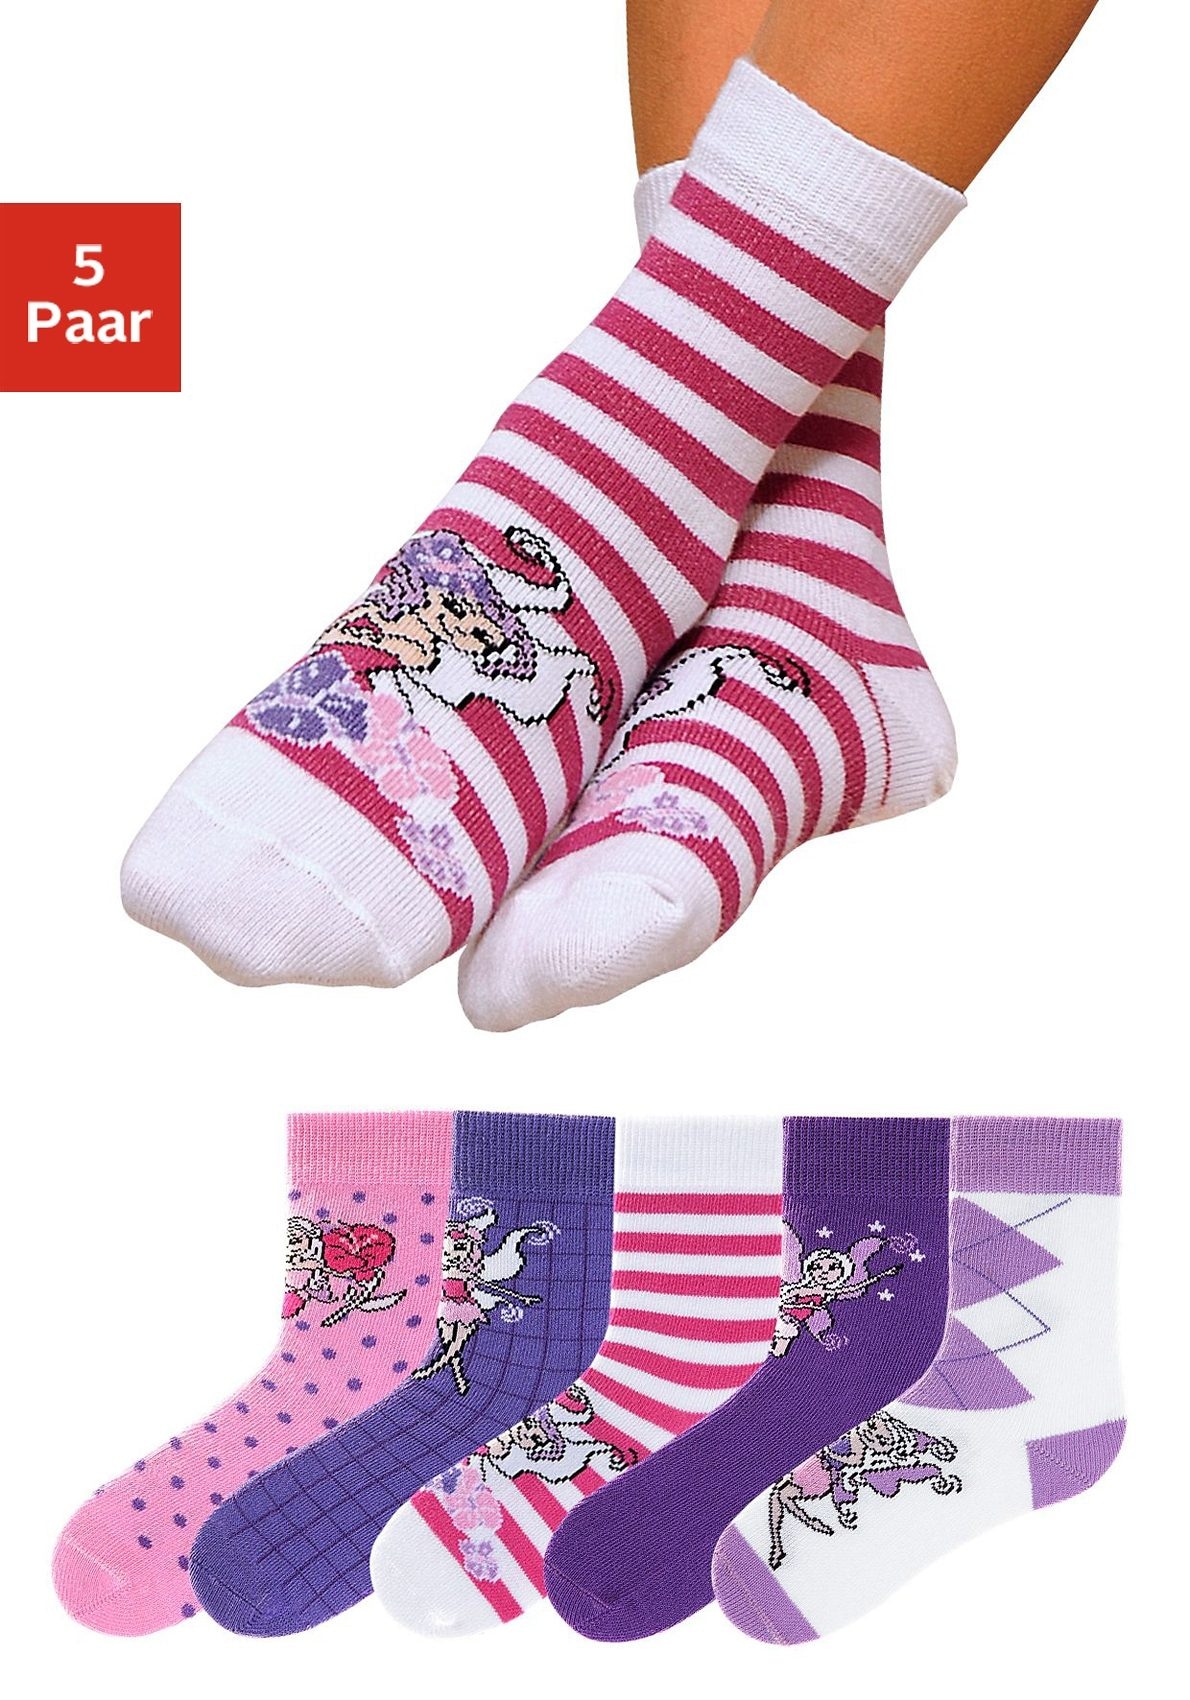 H.I.S Socken, (5 Paar), in 5 farbenfrohen Designs